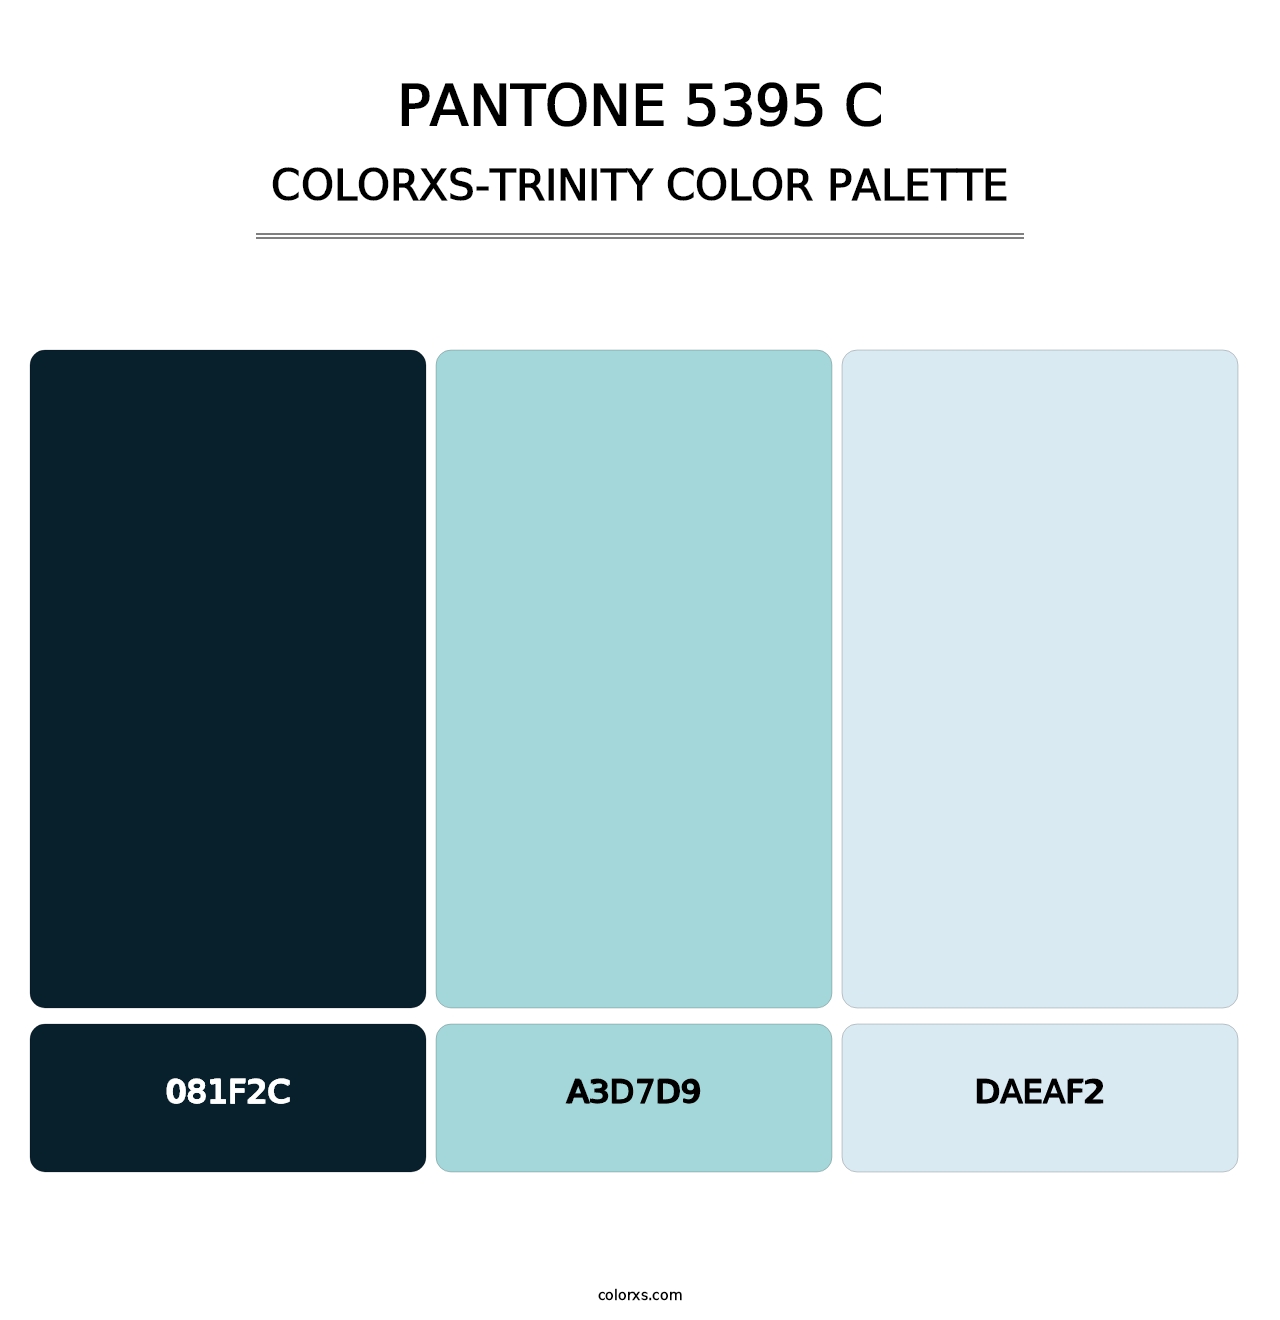 PANTONE 5395 C - Colorxs Trinity Palette